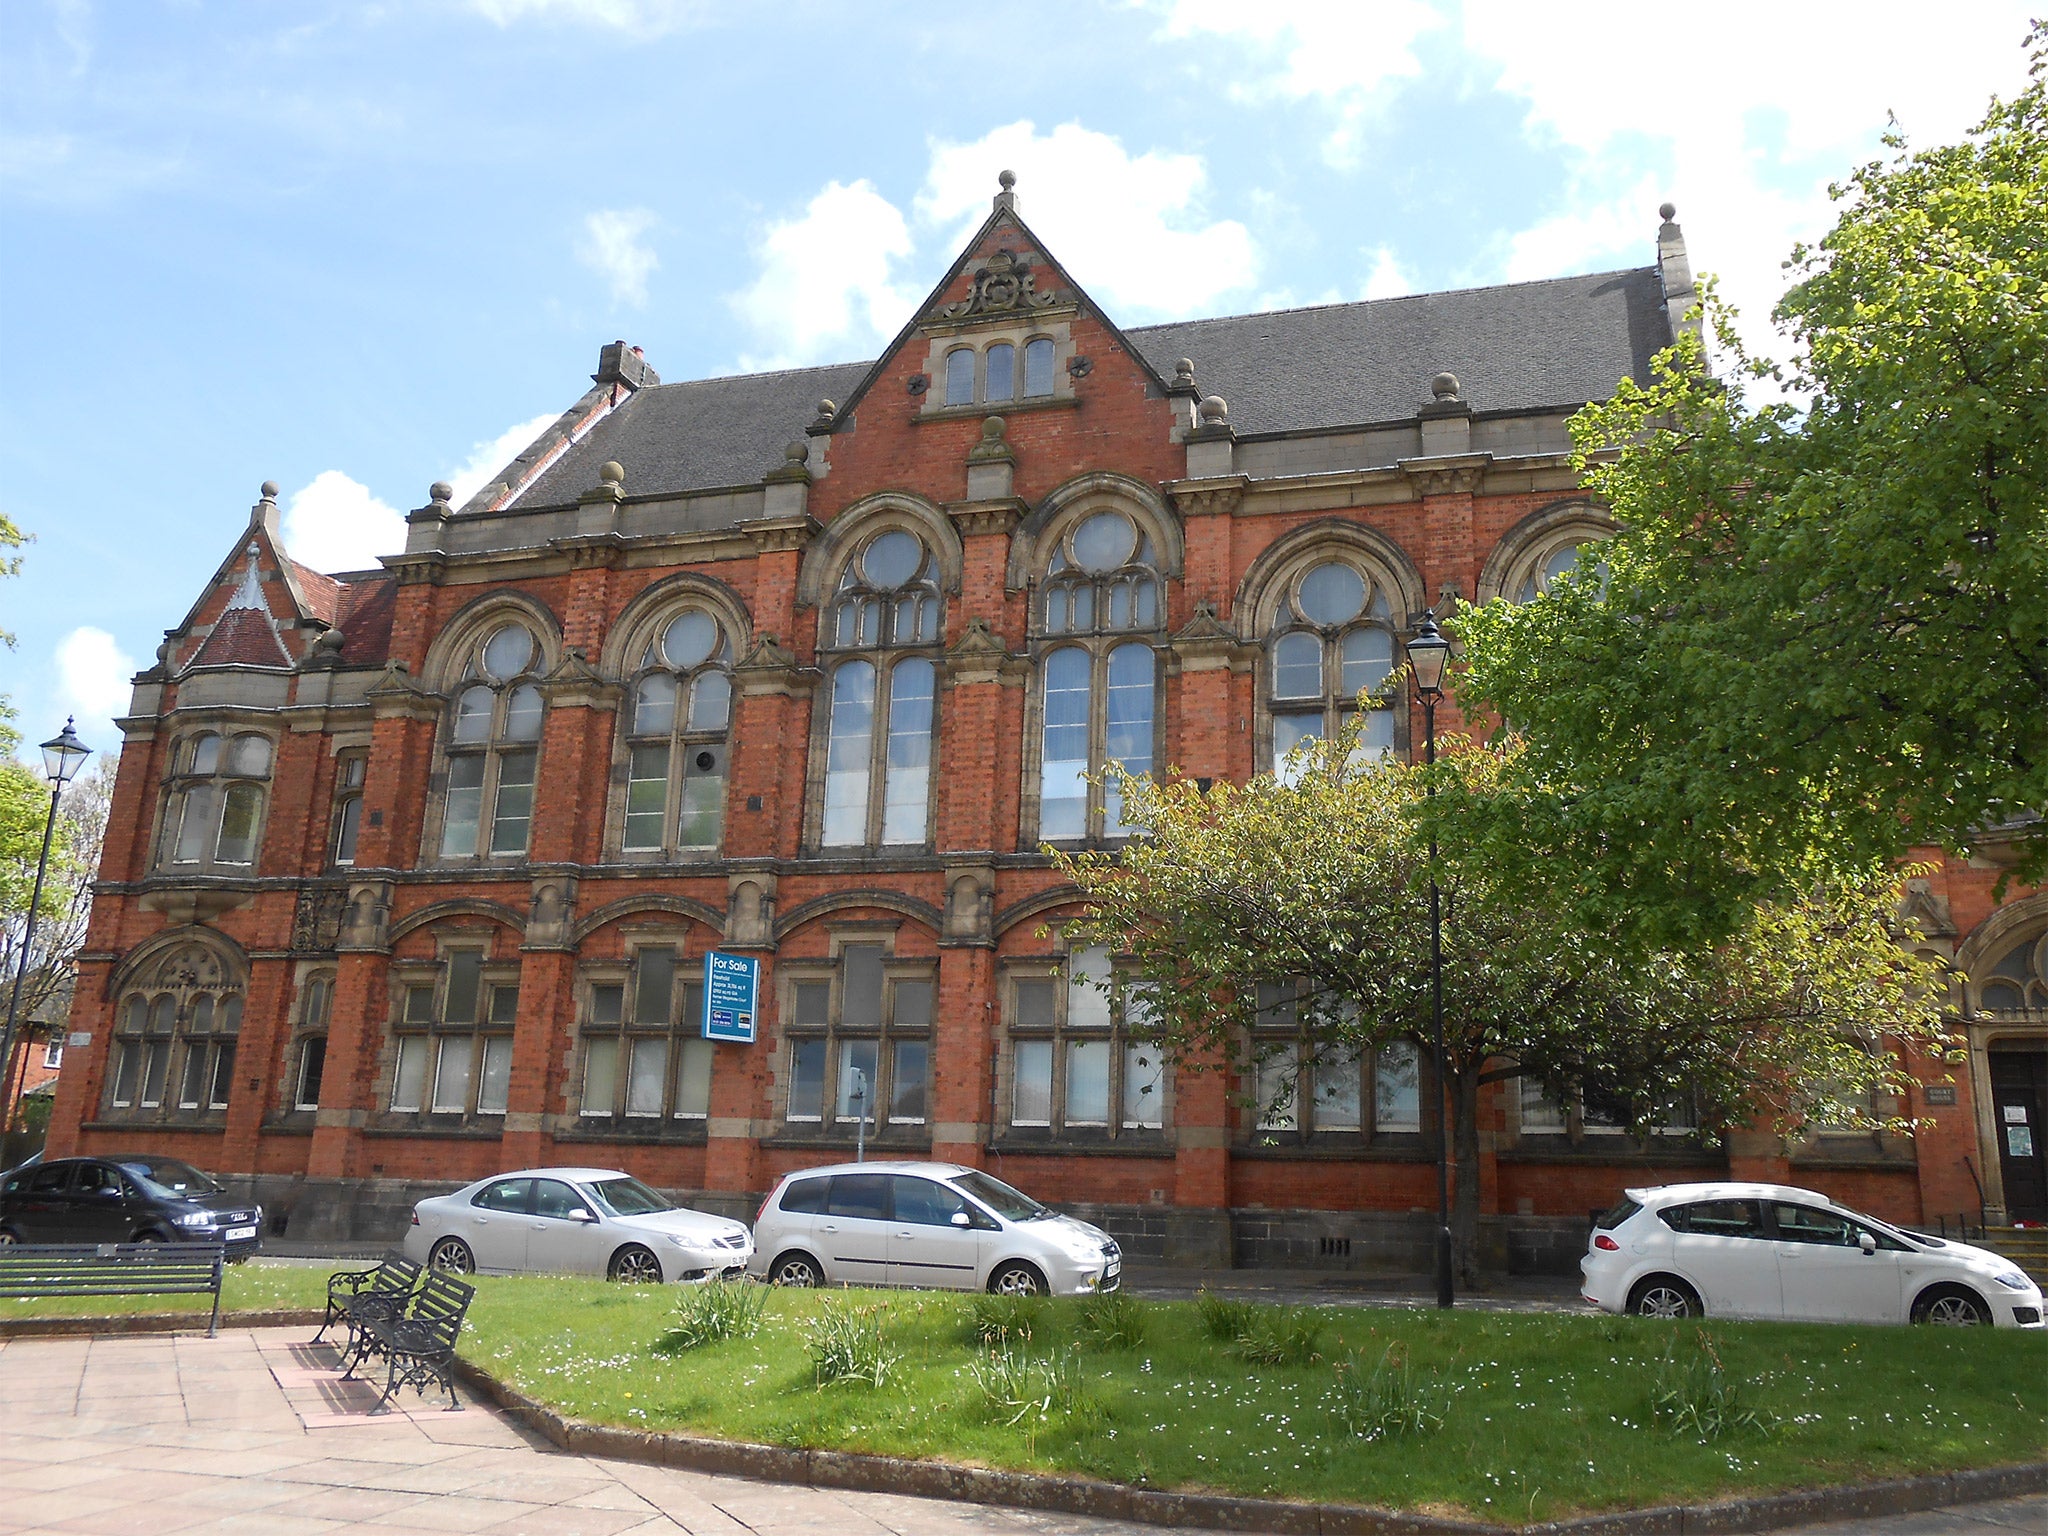 Fenton Town Hall in Stoke-on-Trent